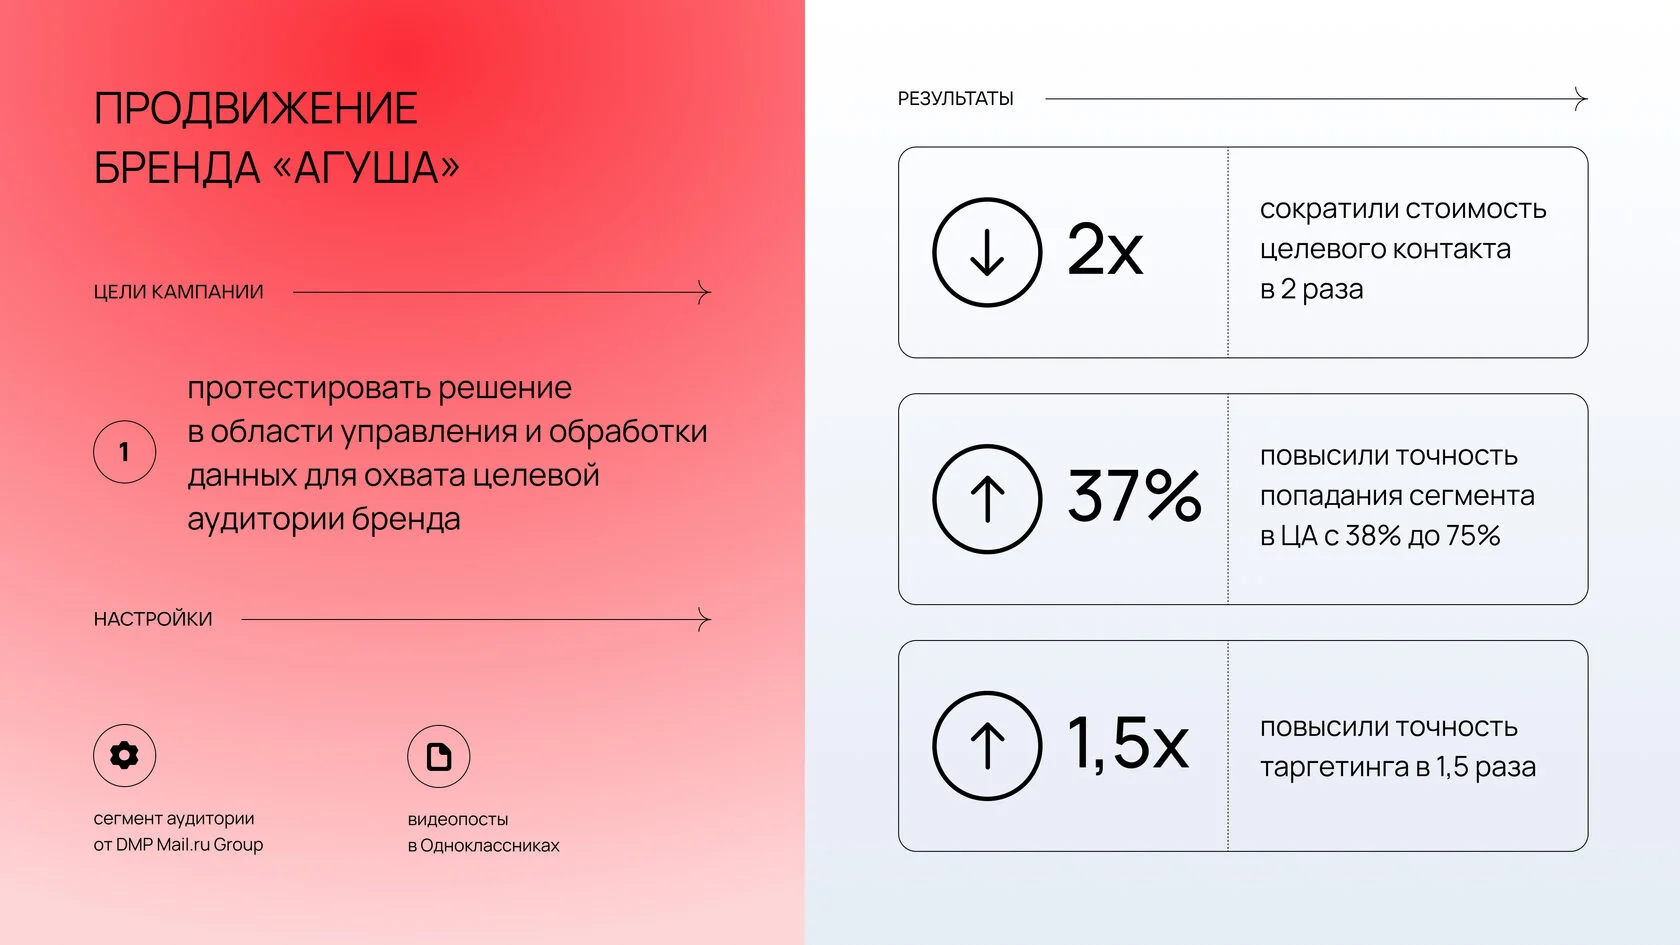 DMP Mail.ru Group для продвижения бренда «Агуша»